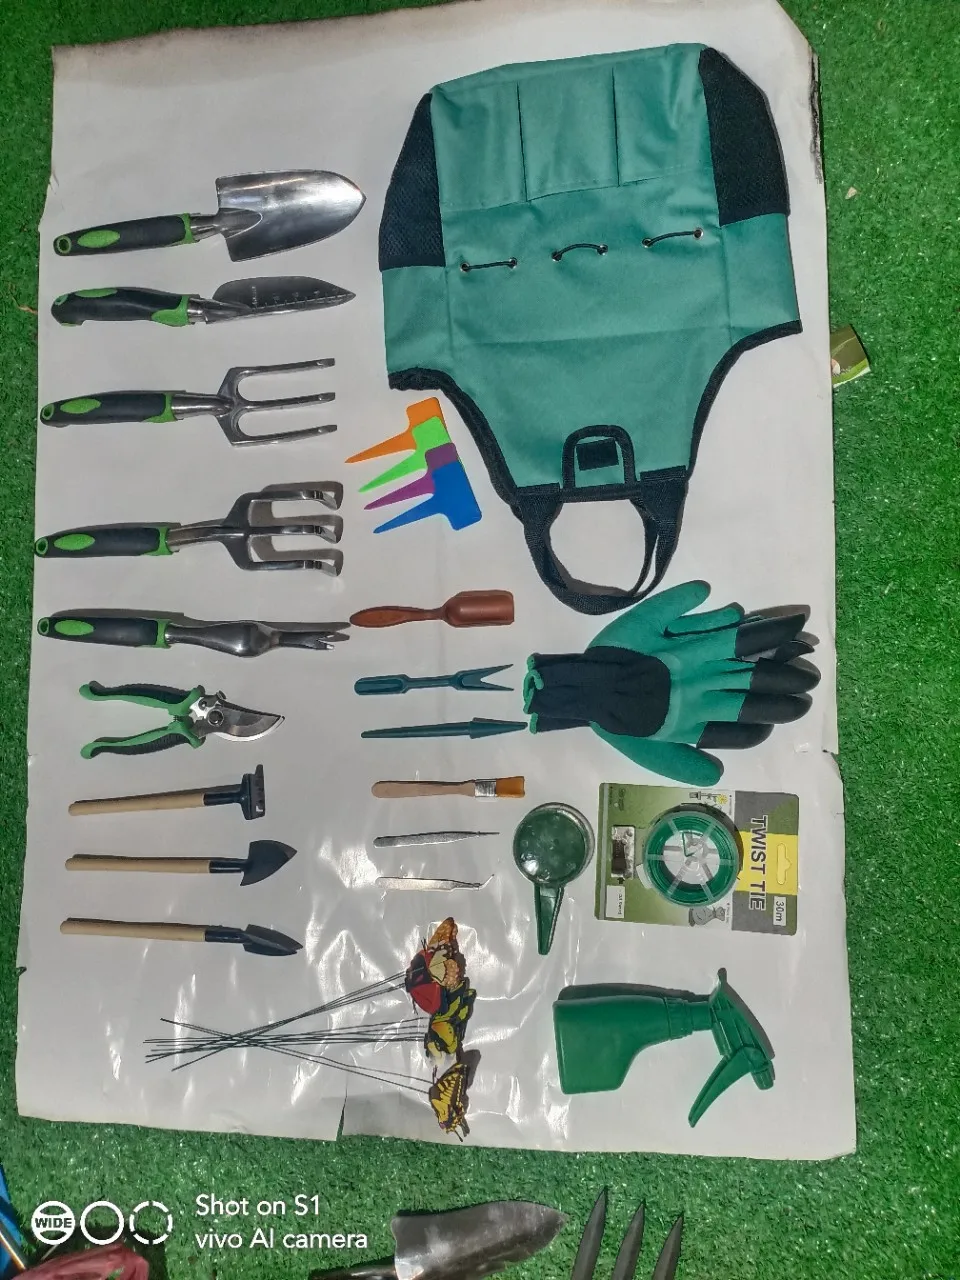 
83 Pcs Garden Tools Set Succulent Tools Set, Heavy Duty Aluminum Manual Garden Kit Outdoor Gardening Gifts Tools for Men Women ( 